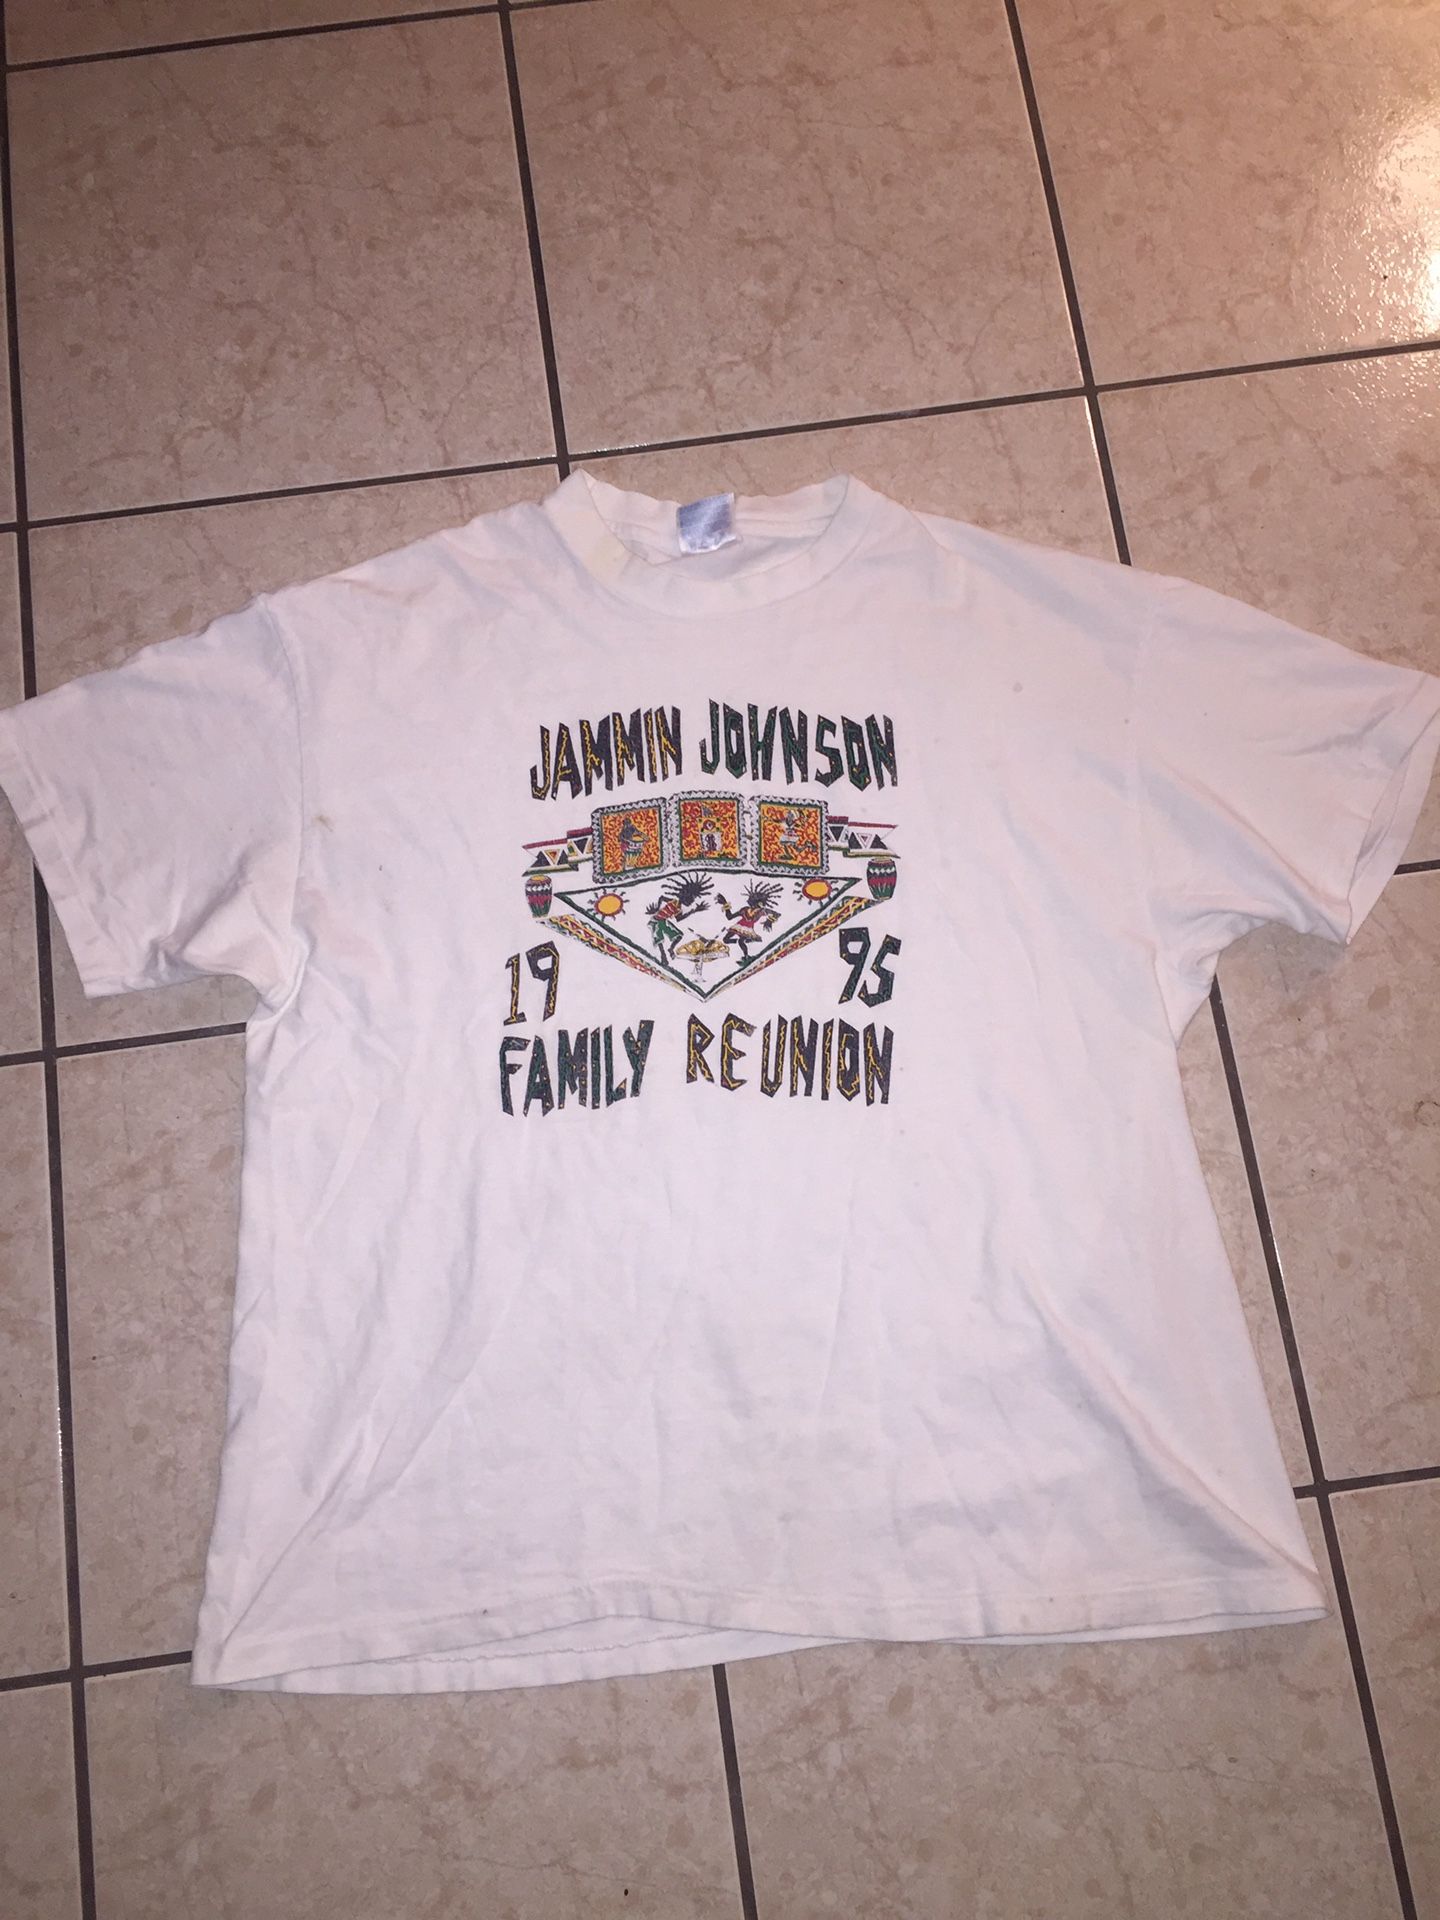 Jamaican family reunion shirt from 1995